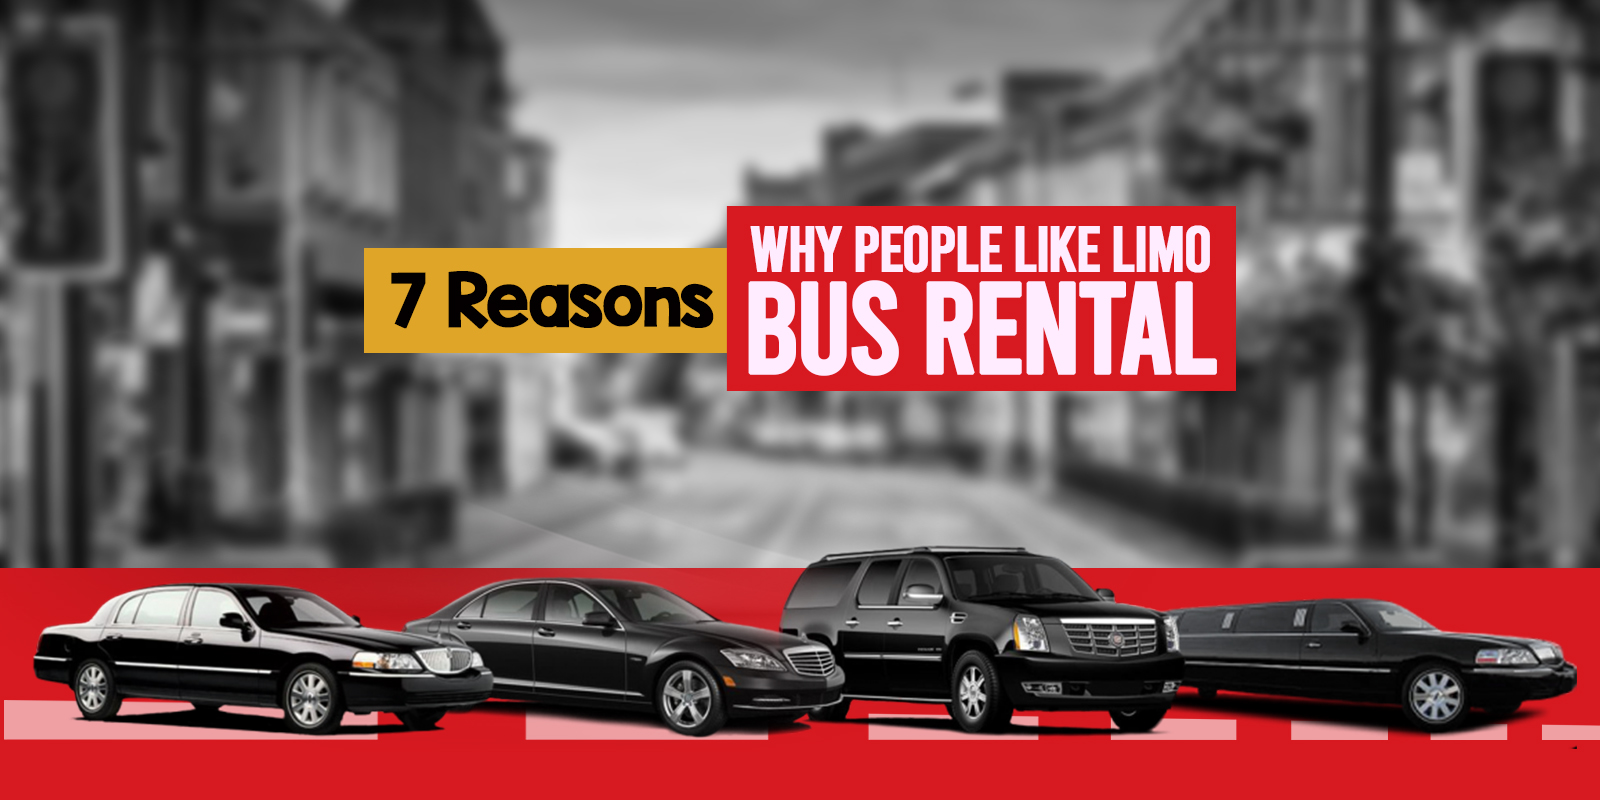 7 Reasons Why People Like Limo Bus Rental